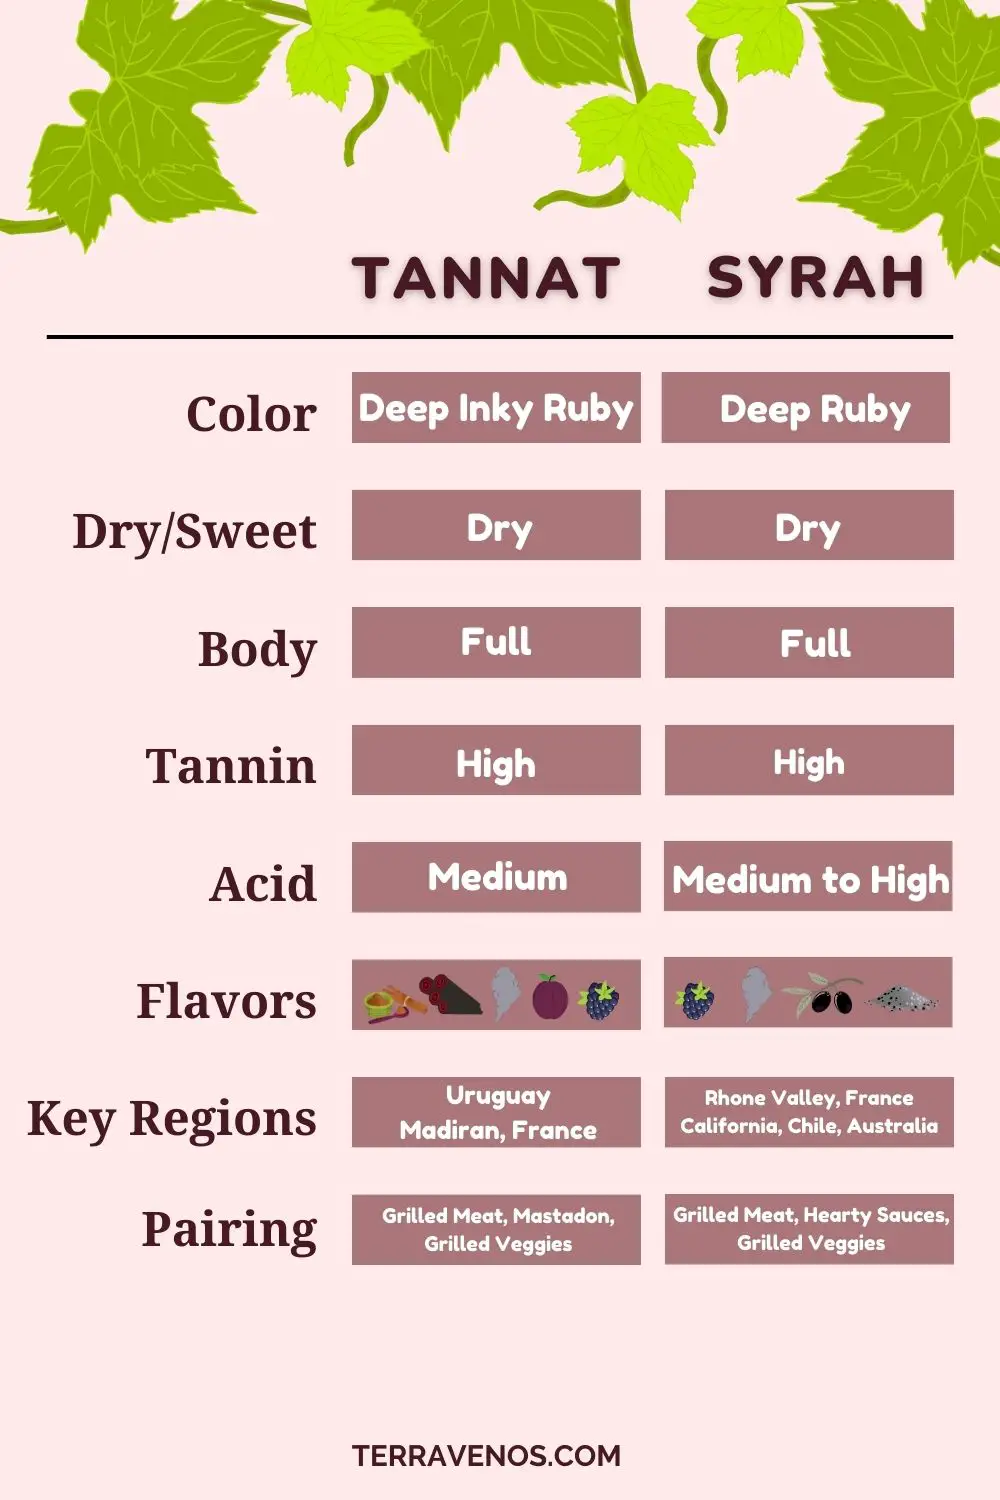 tannat-vs-syrah-wine-comparison-infographic